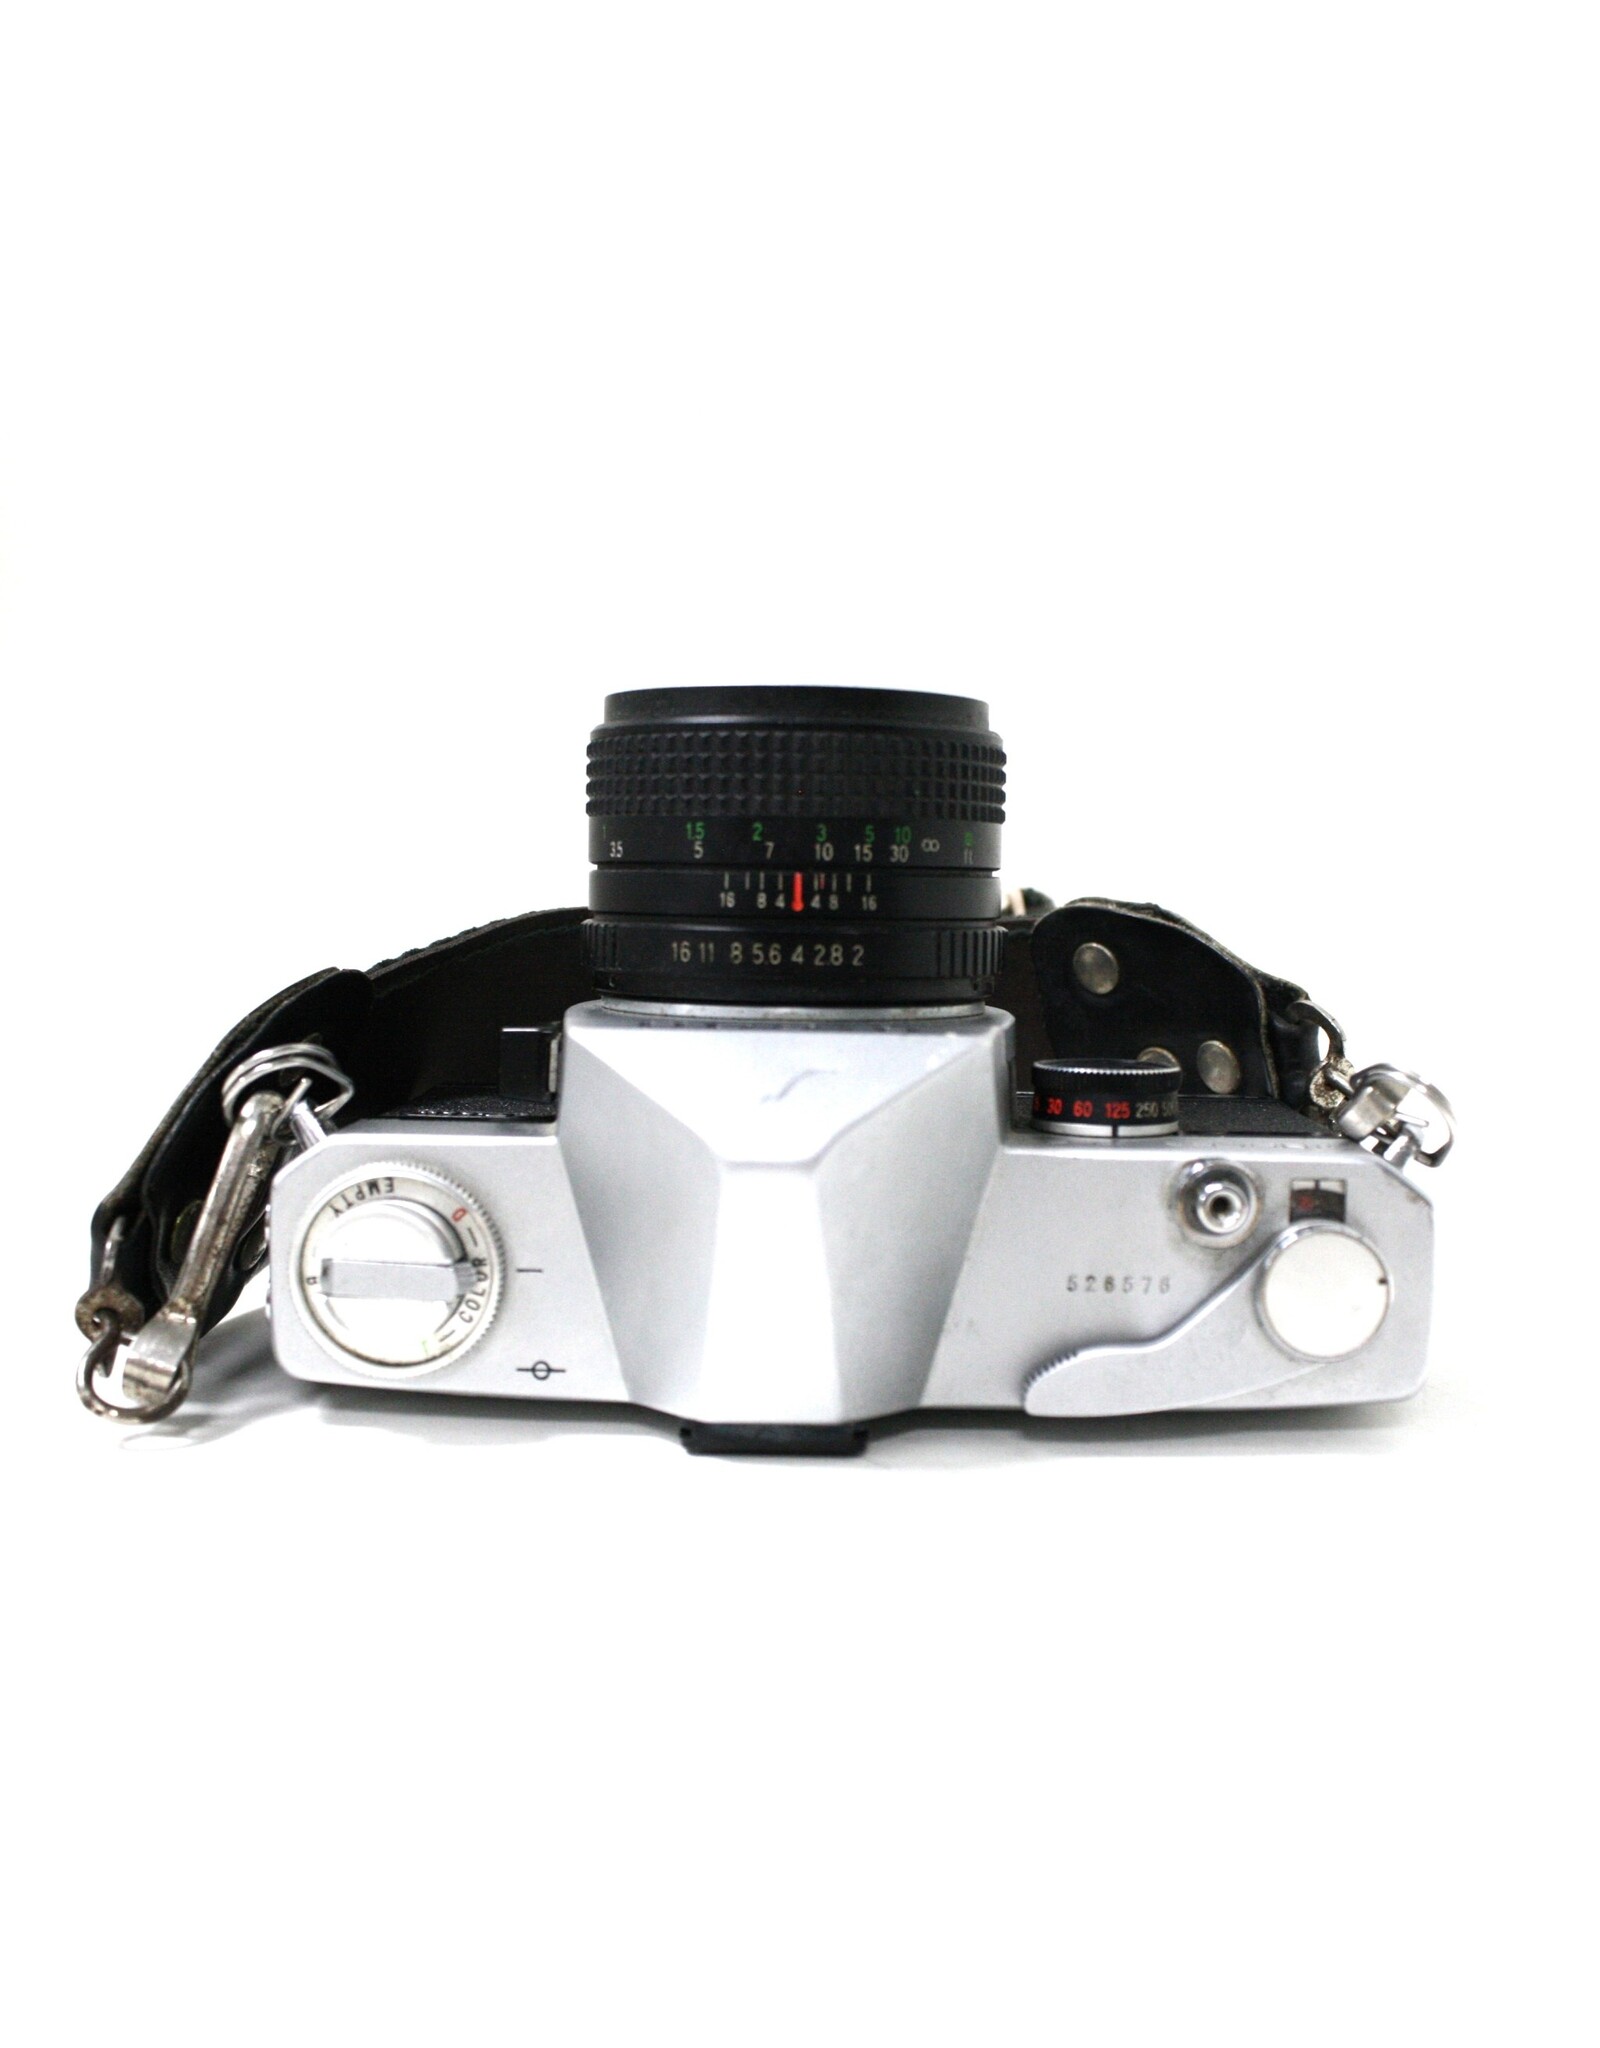 Ricoh Ricoh Singlex TLS 35mm Film SLR with 50mm f2 Rikenon Lens